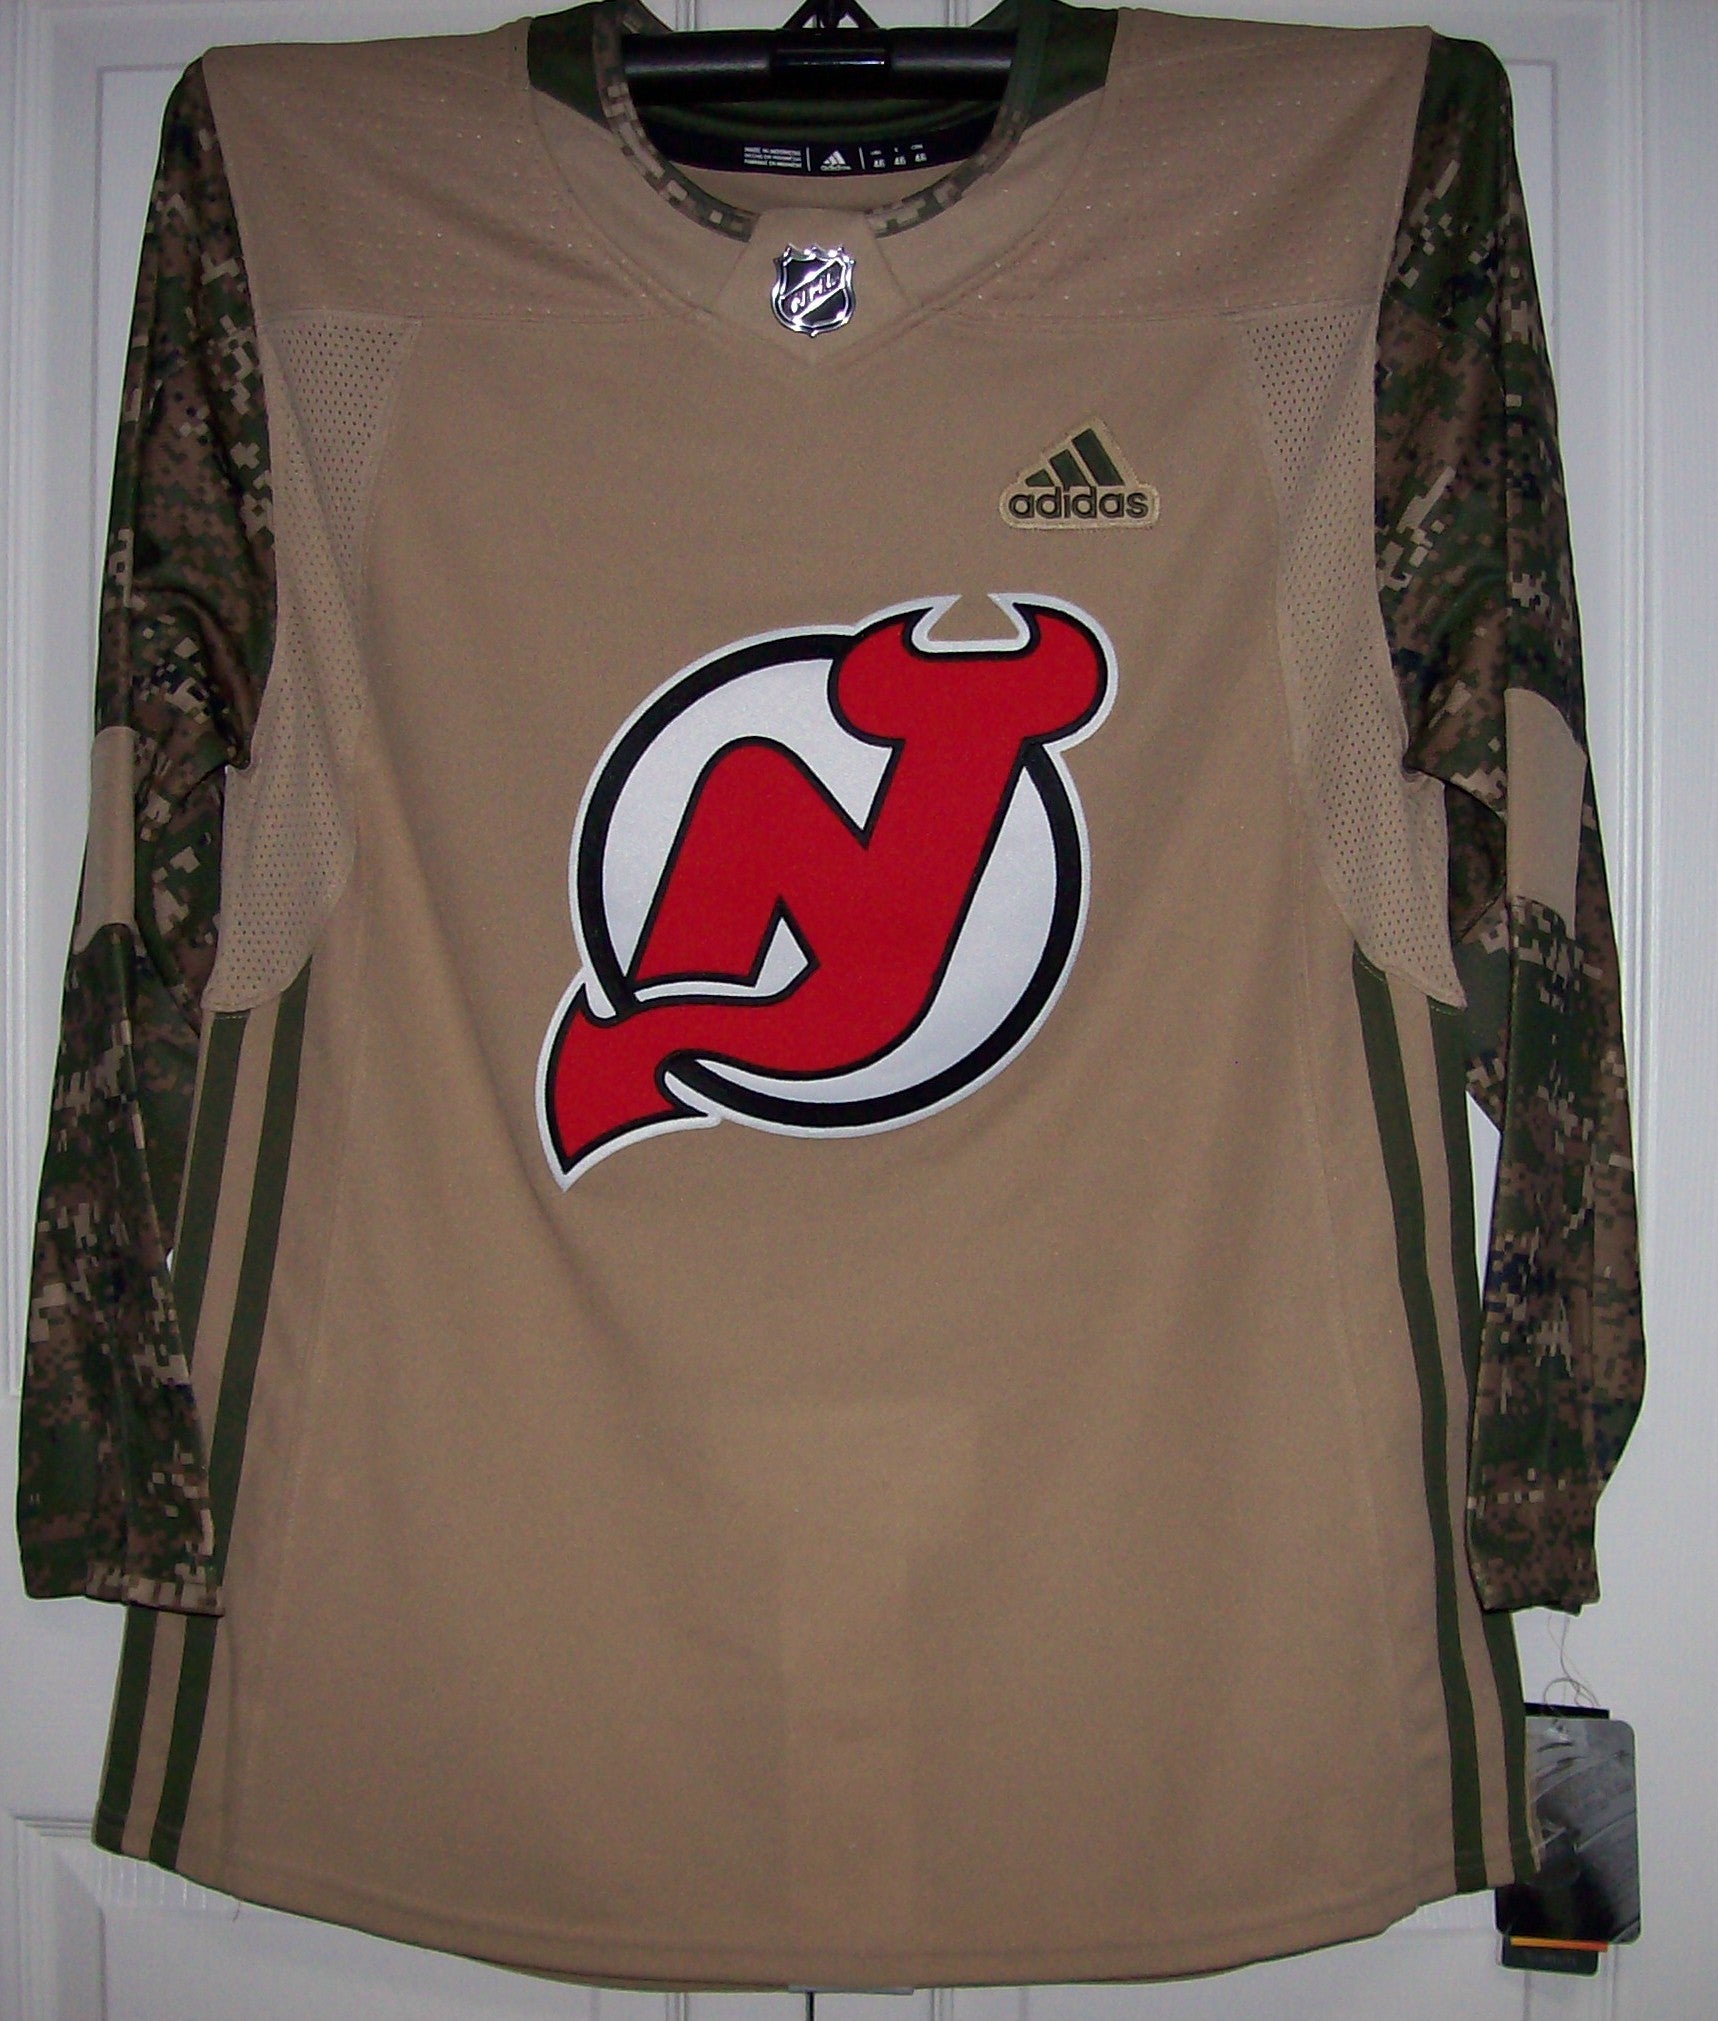 Reebok NJ Devils home jersey  Reebok, Jersey, Retail logos